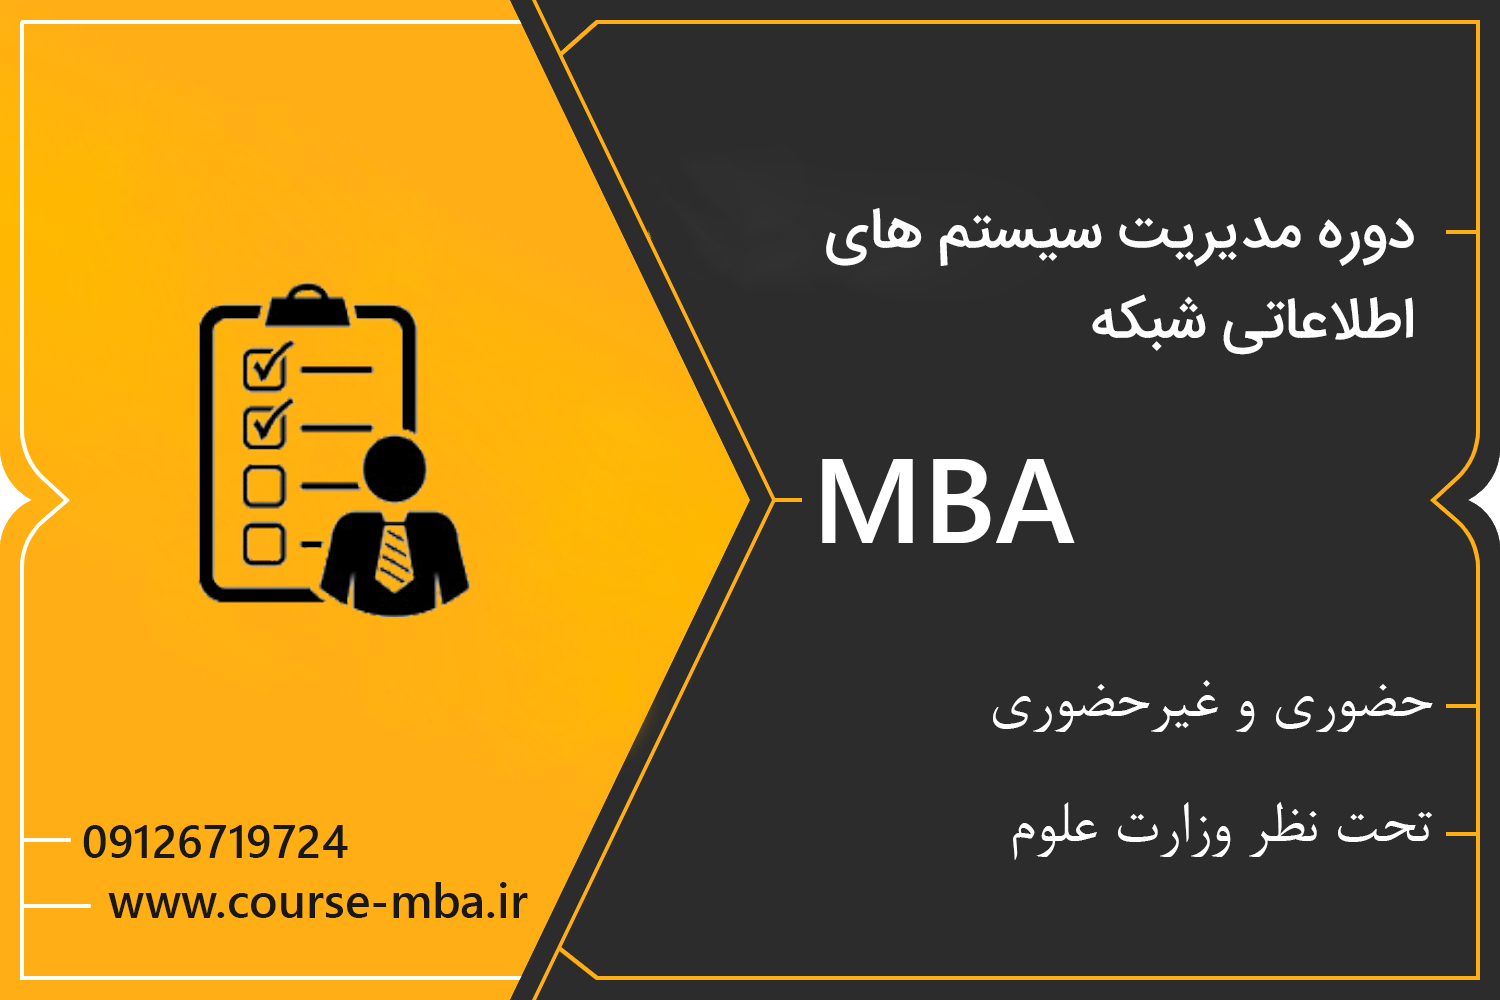 دوره MBA مدیریت سیستم های اطلاعاتی شبکه | مدرک MBA مدیریت سیستم های اطلاعاتی شبکه